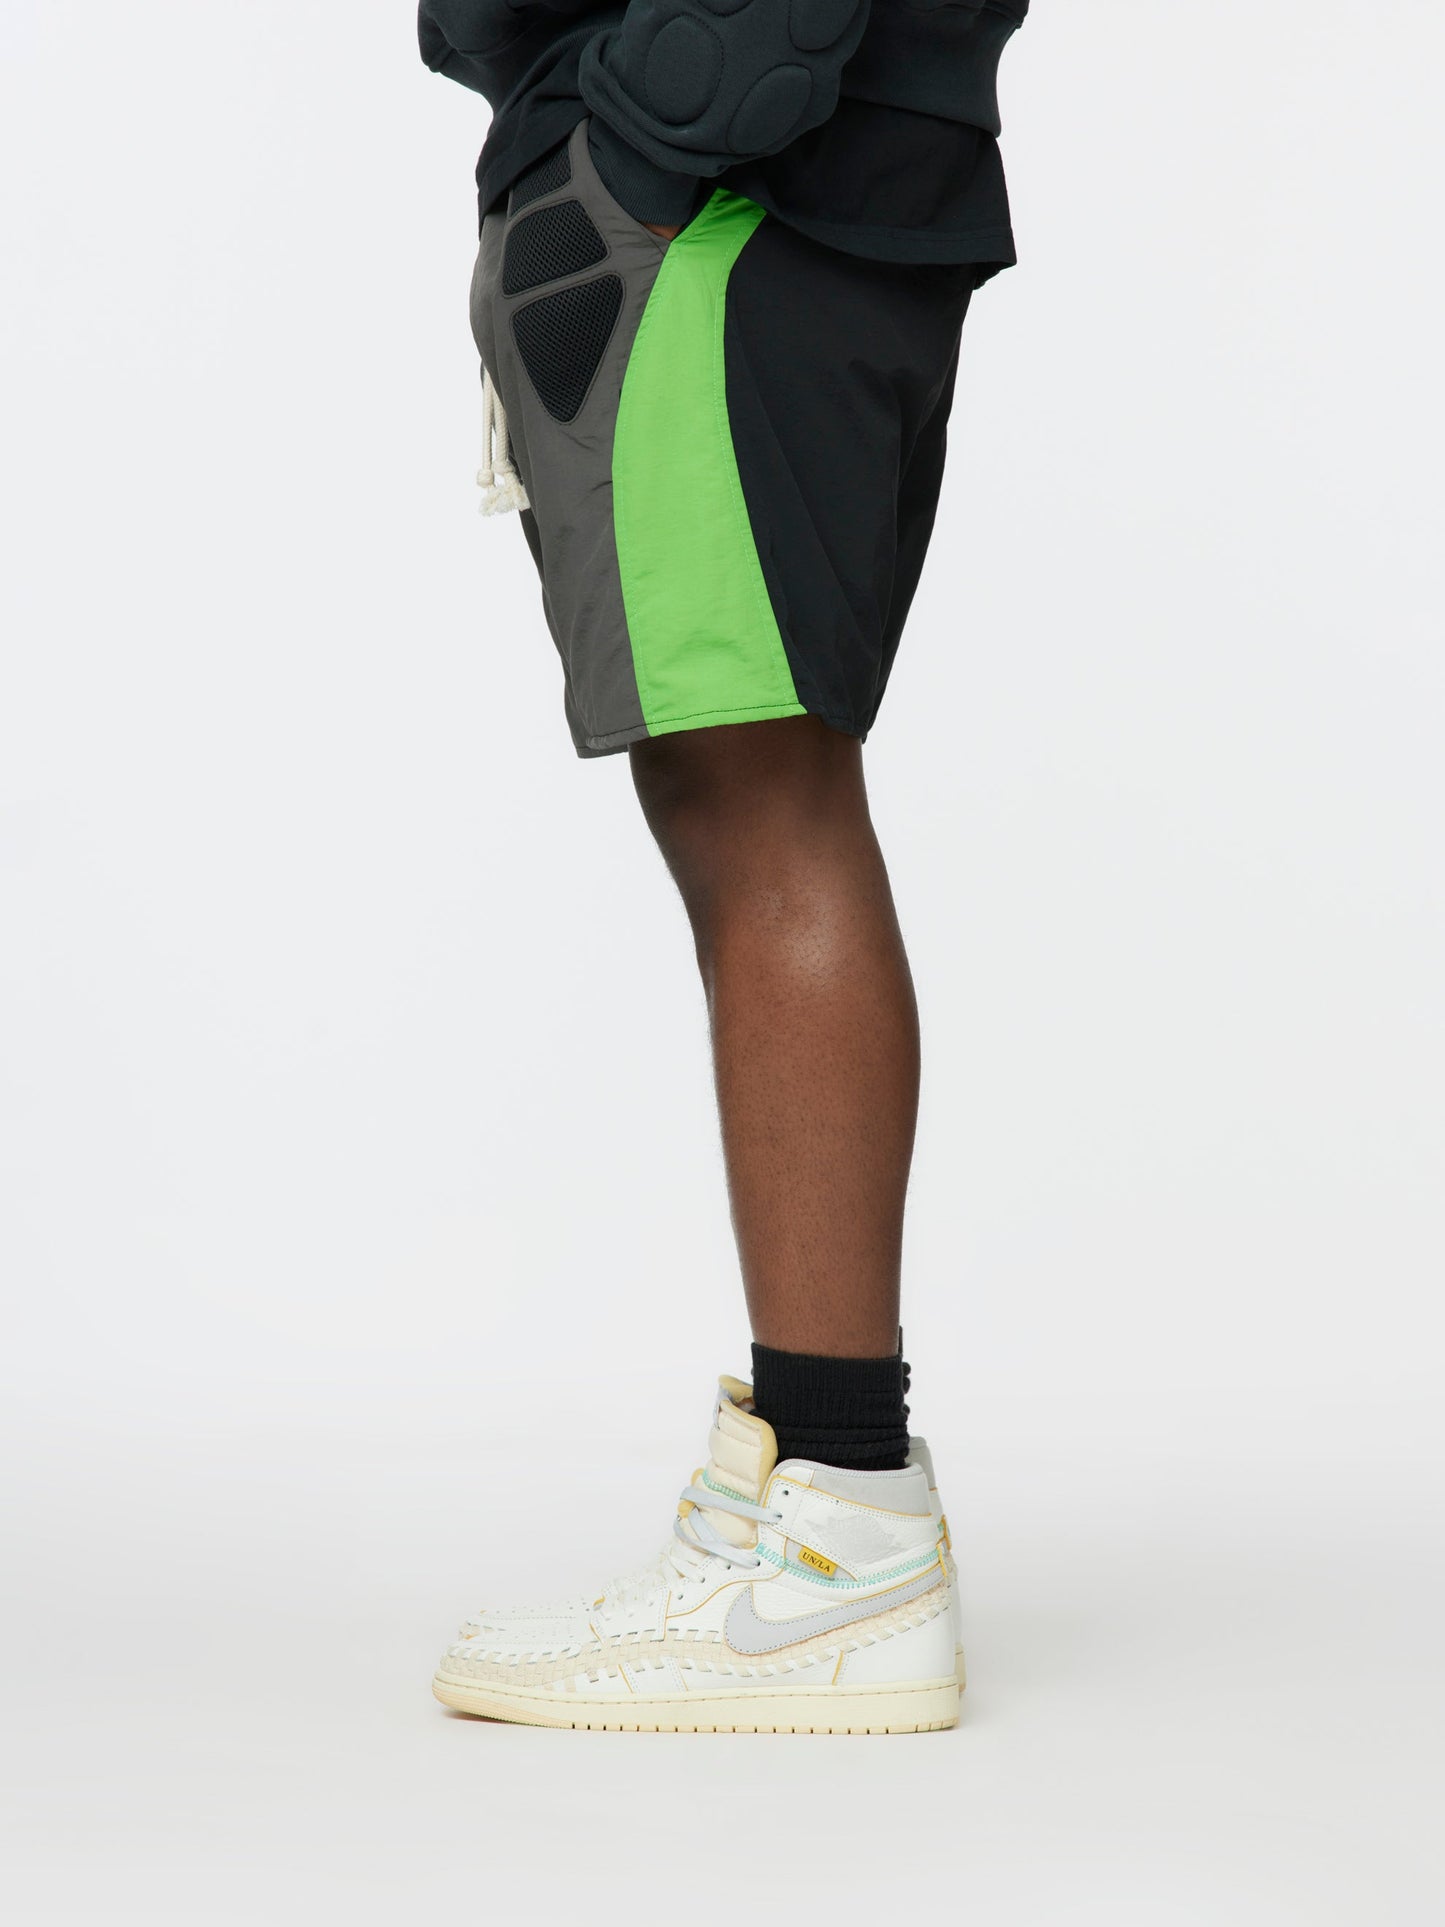 Tech Shorts (Grey/Black/Neon Green)